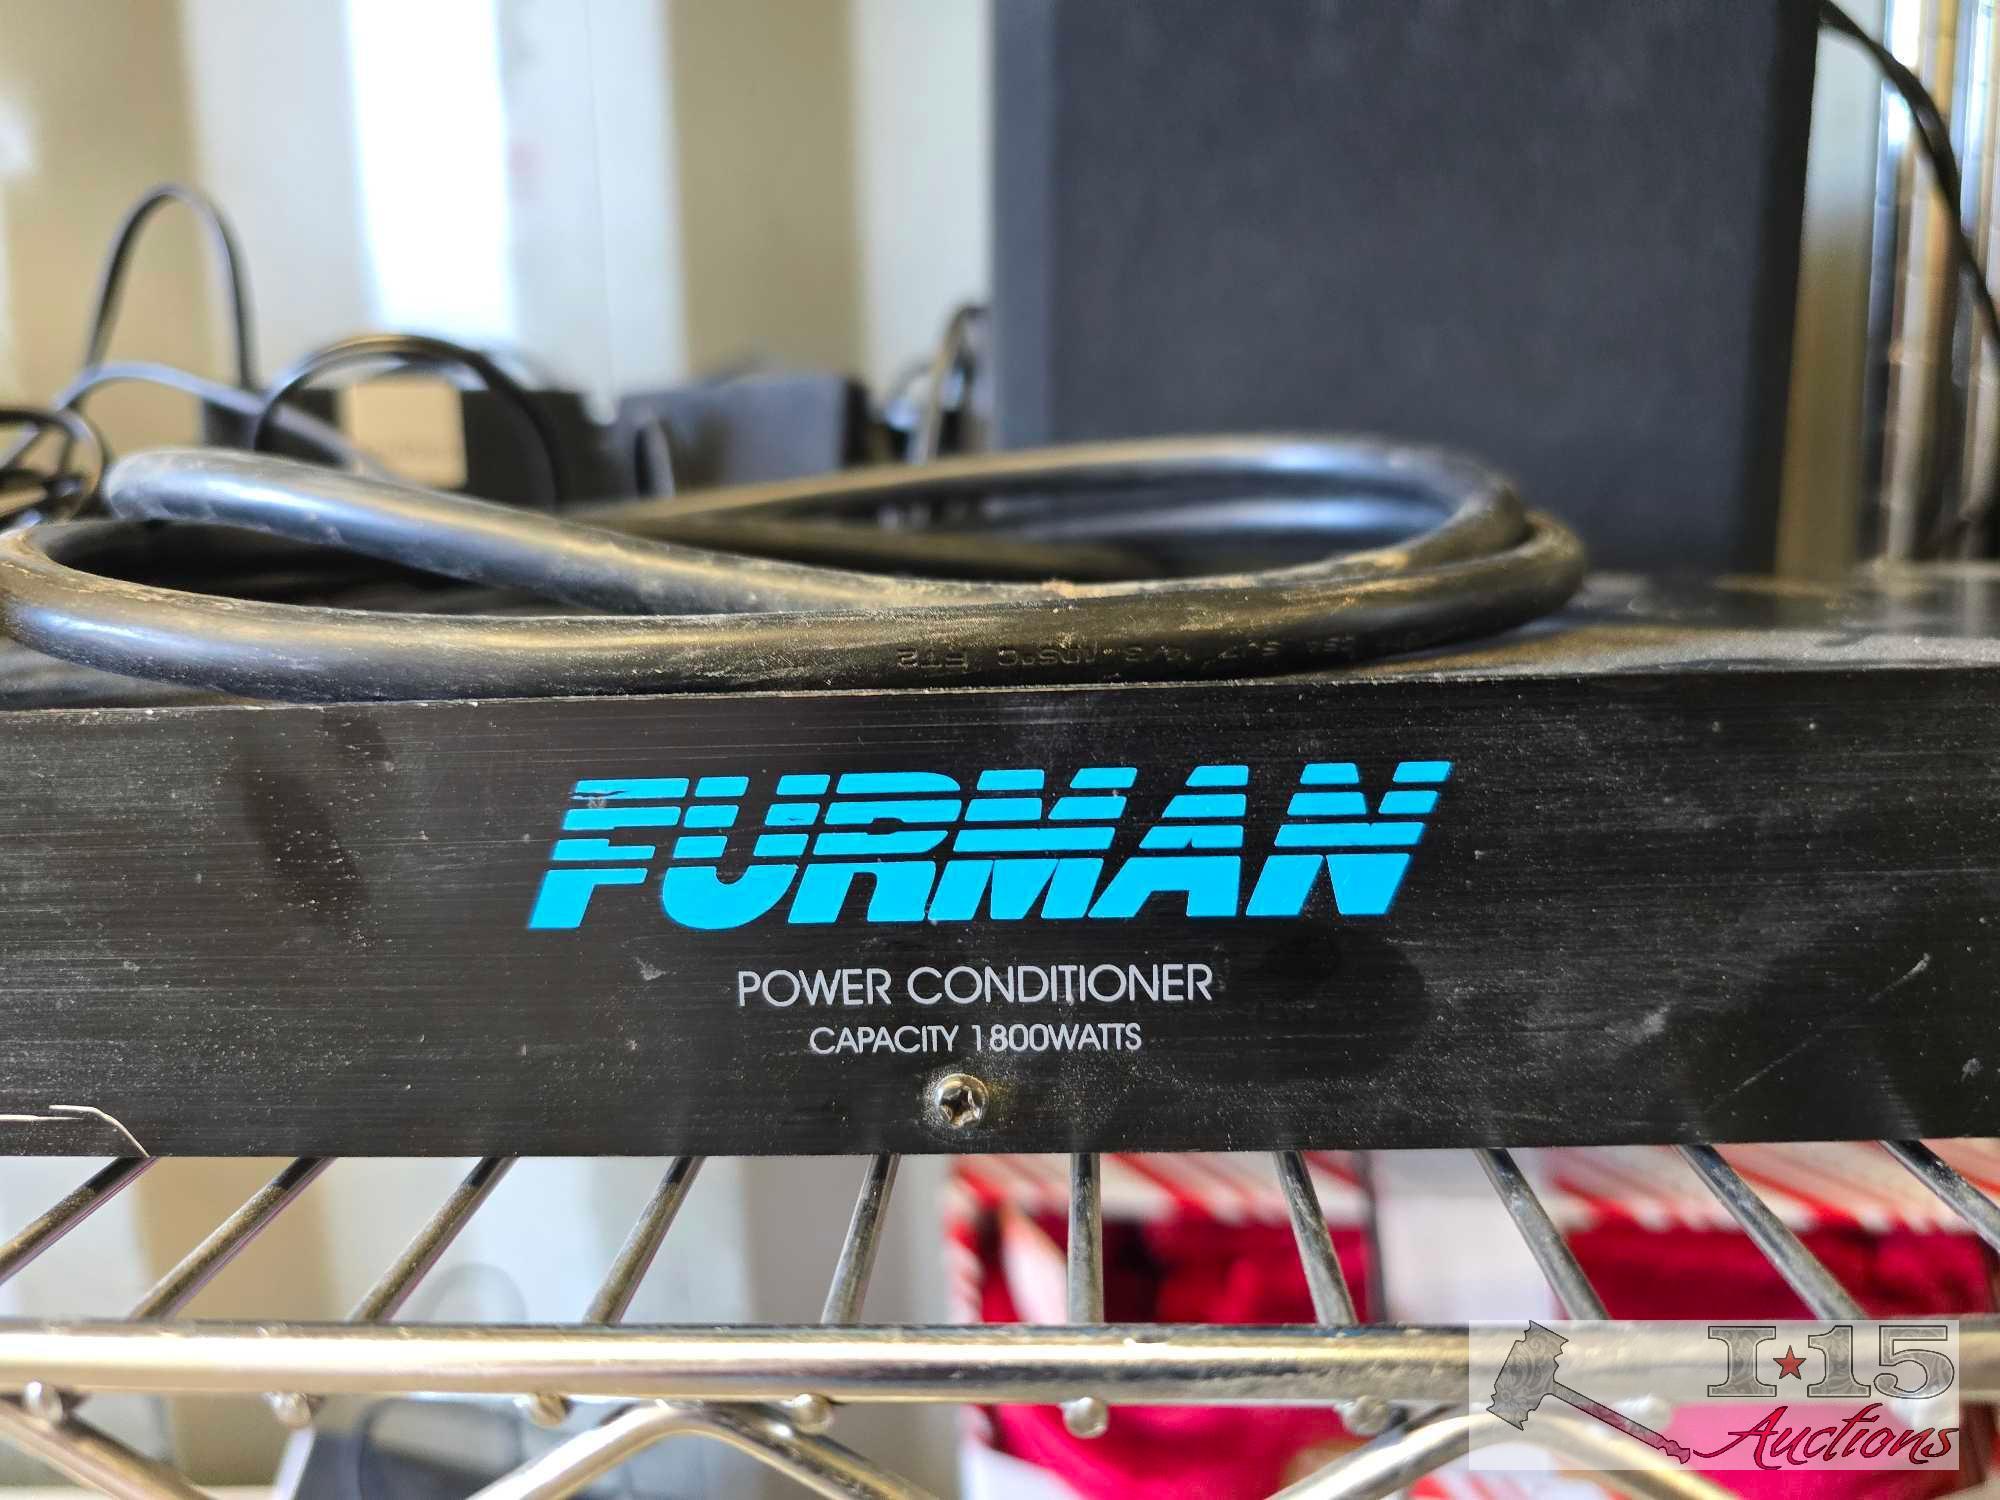 Furman Power Conditioner and Creative Surround Sound Speakers